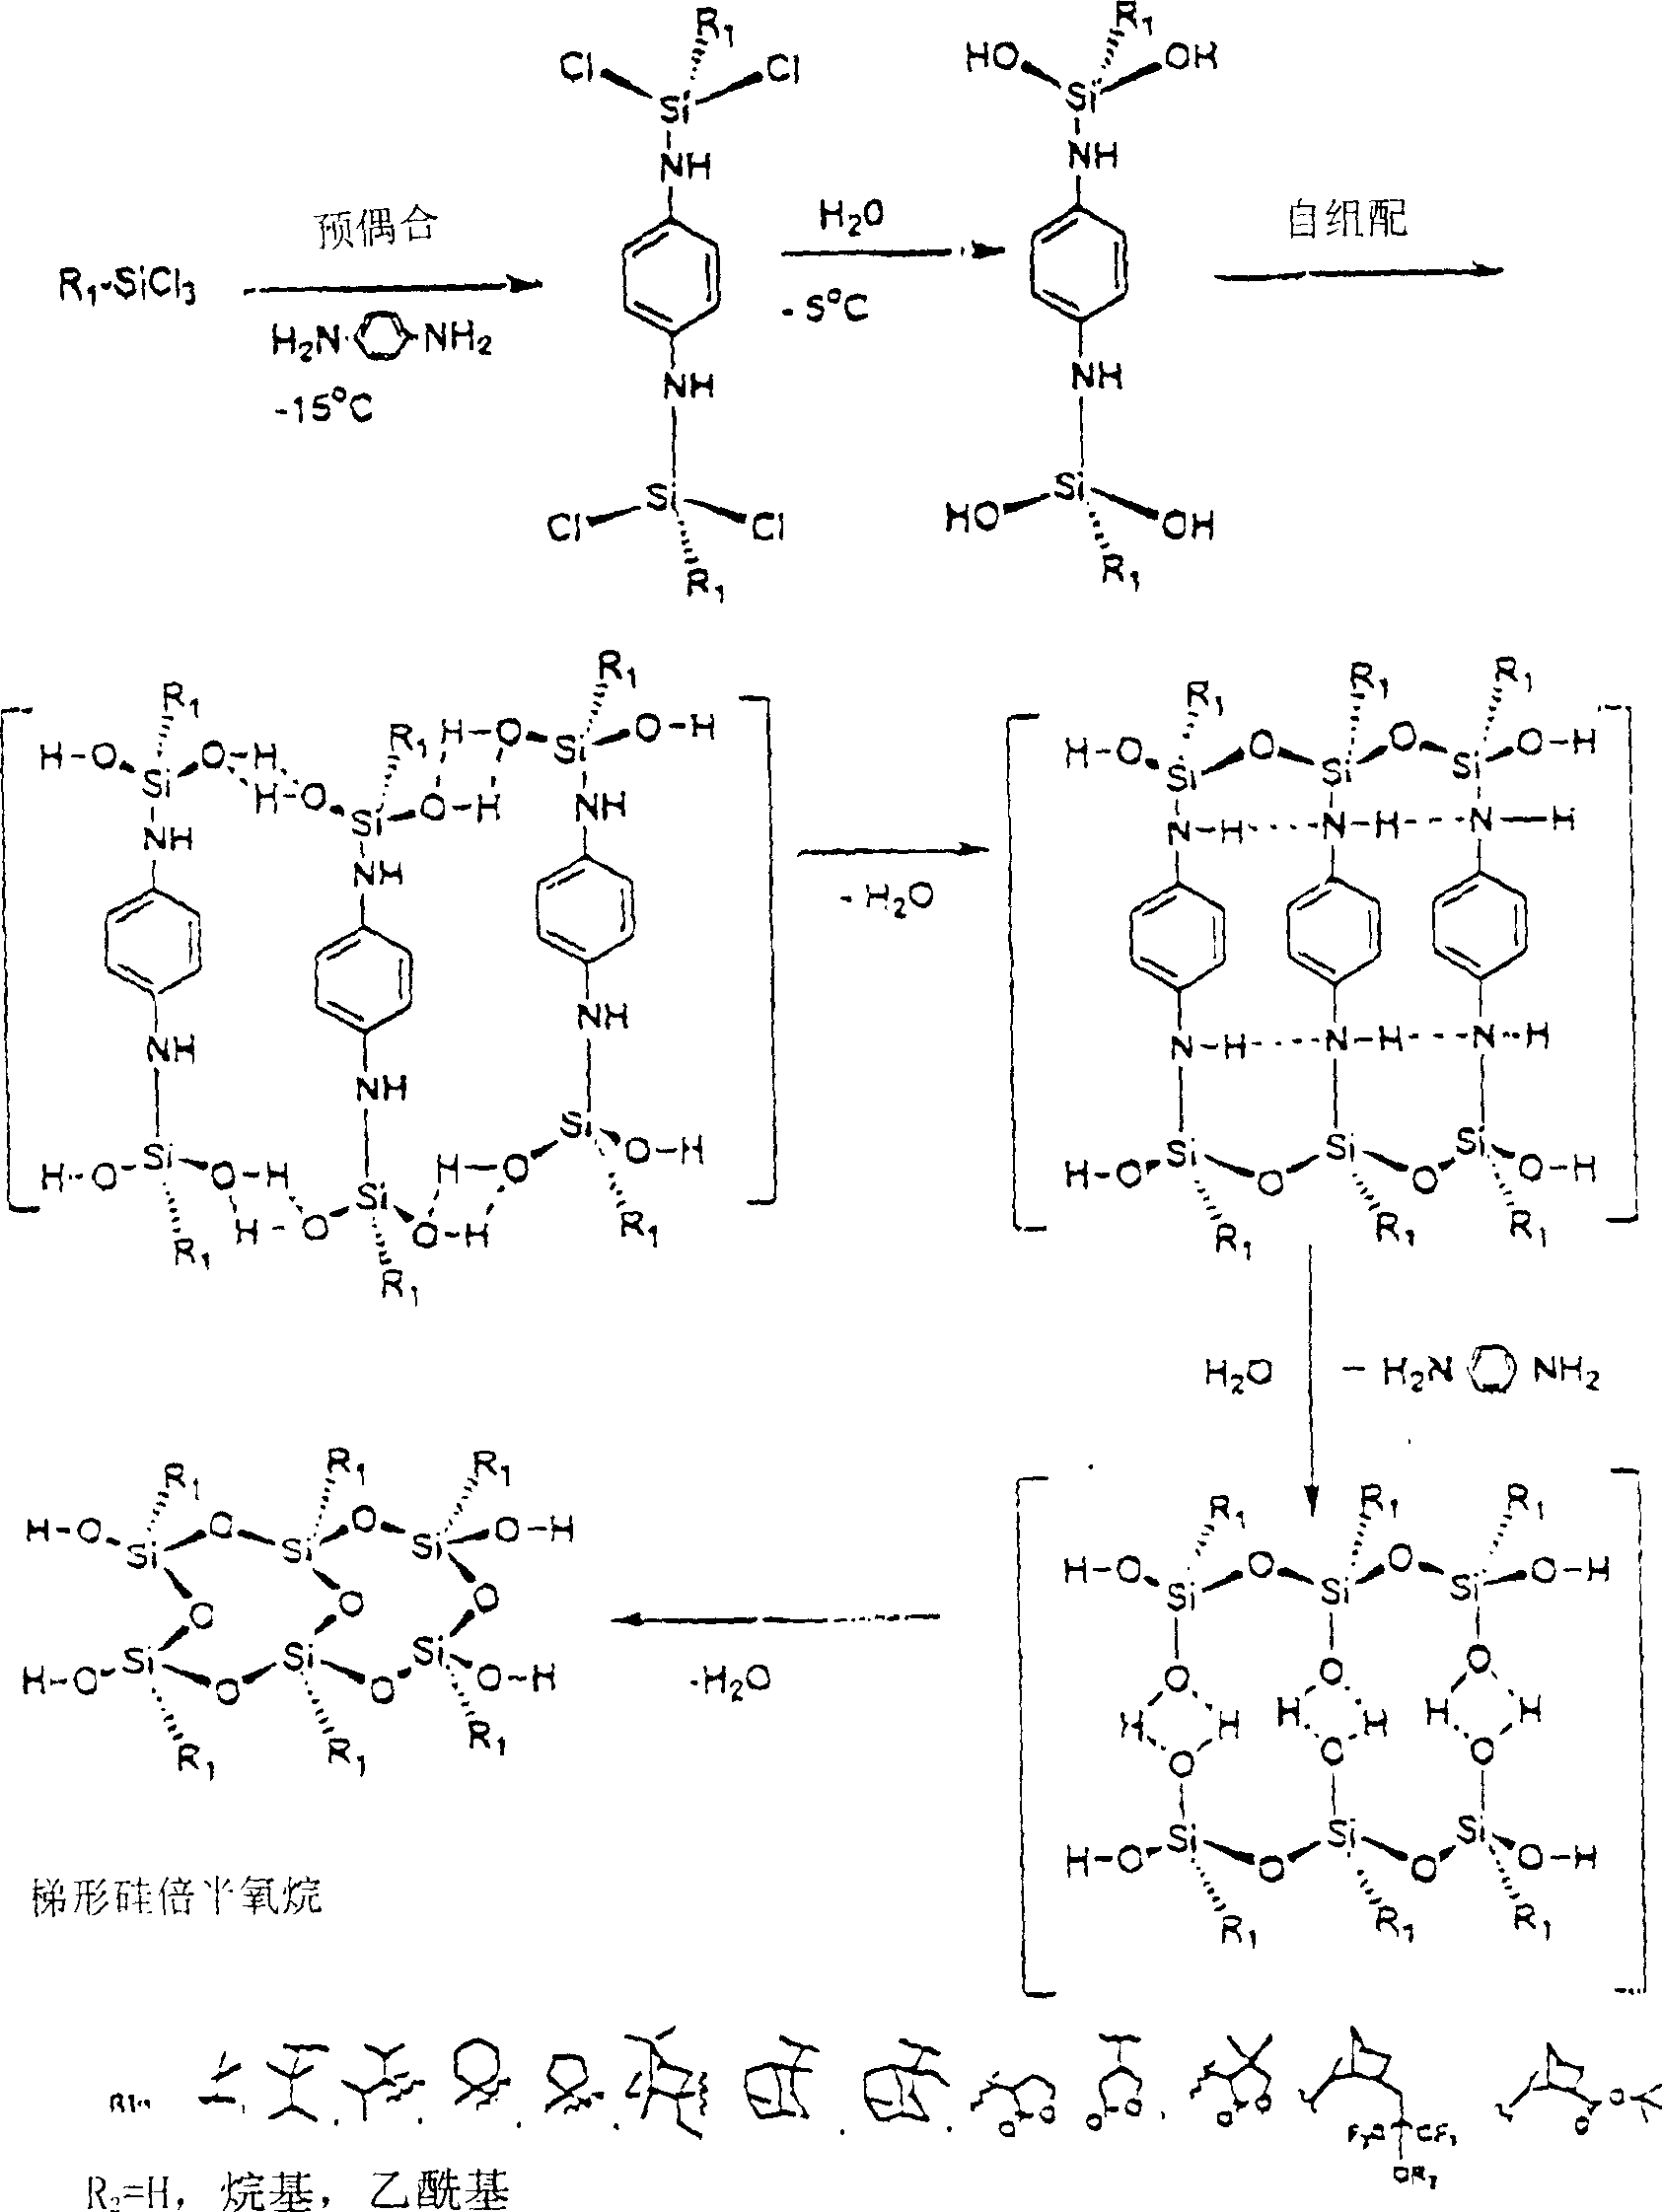 Polyorganosiloxane and preparing method for photoresist composition containing the said polyorganosiloxane